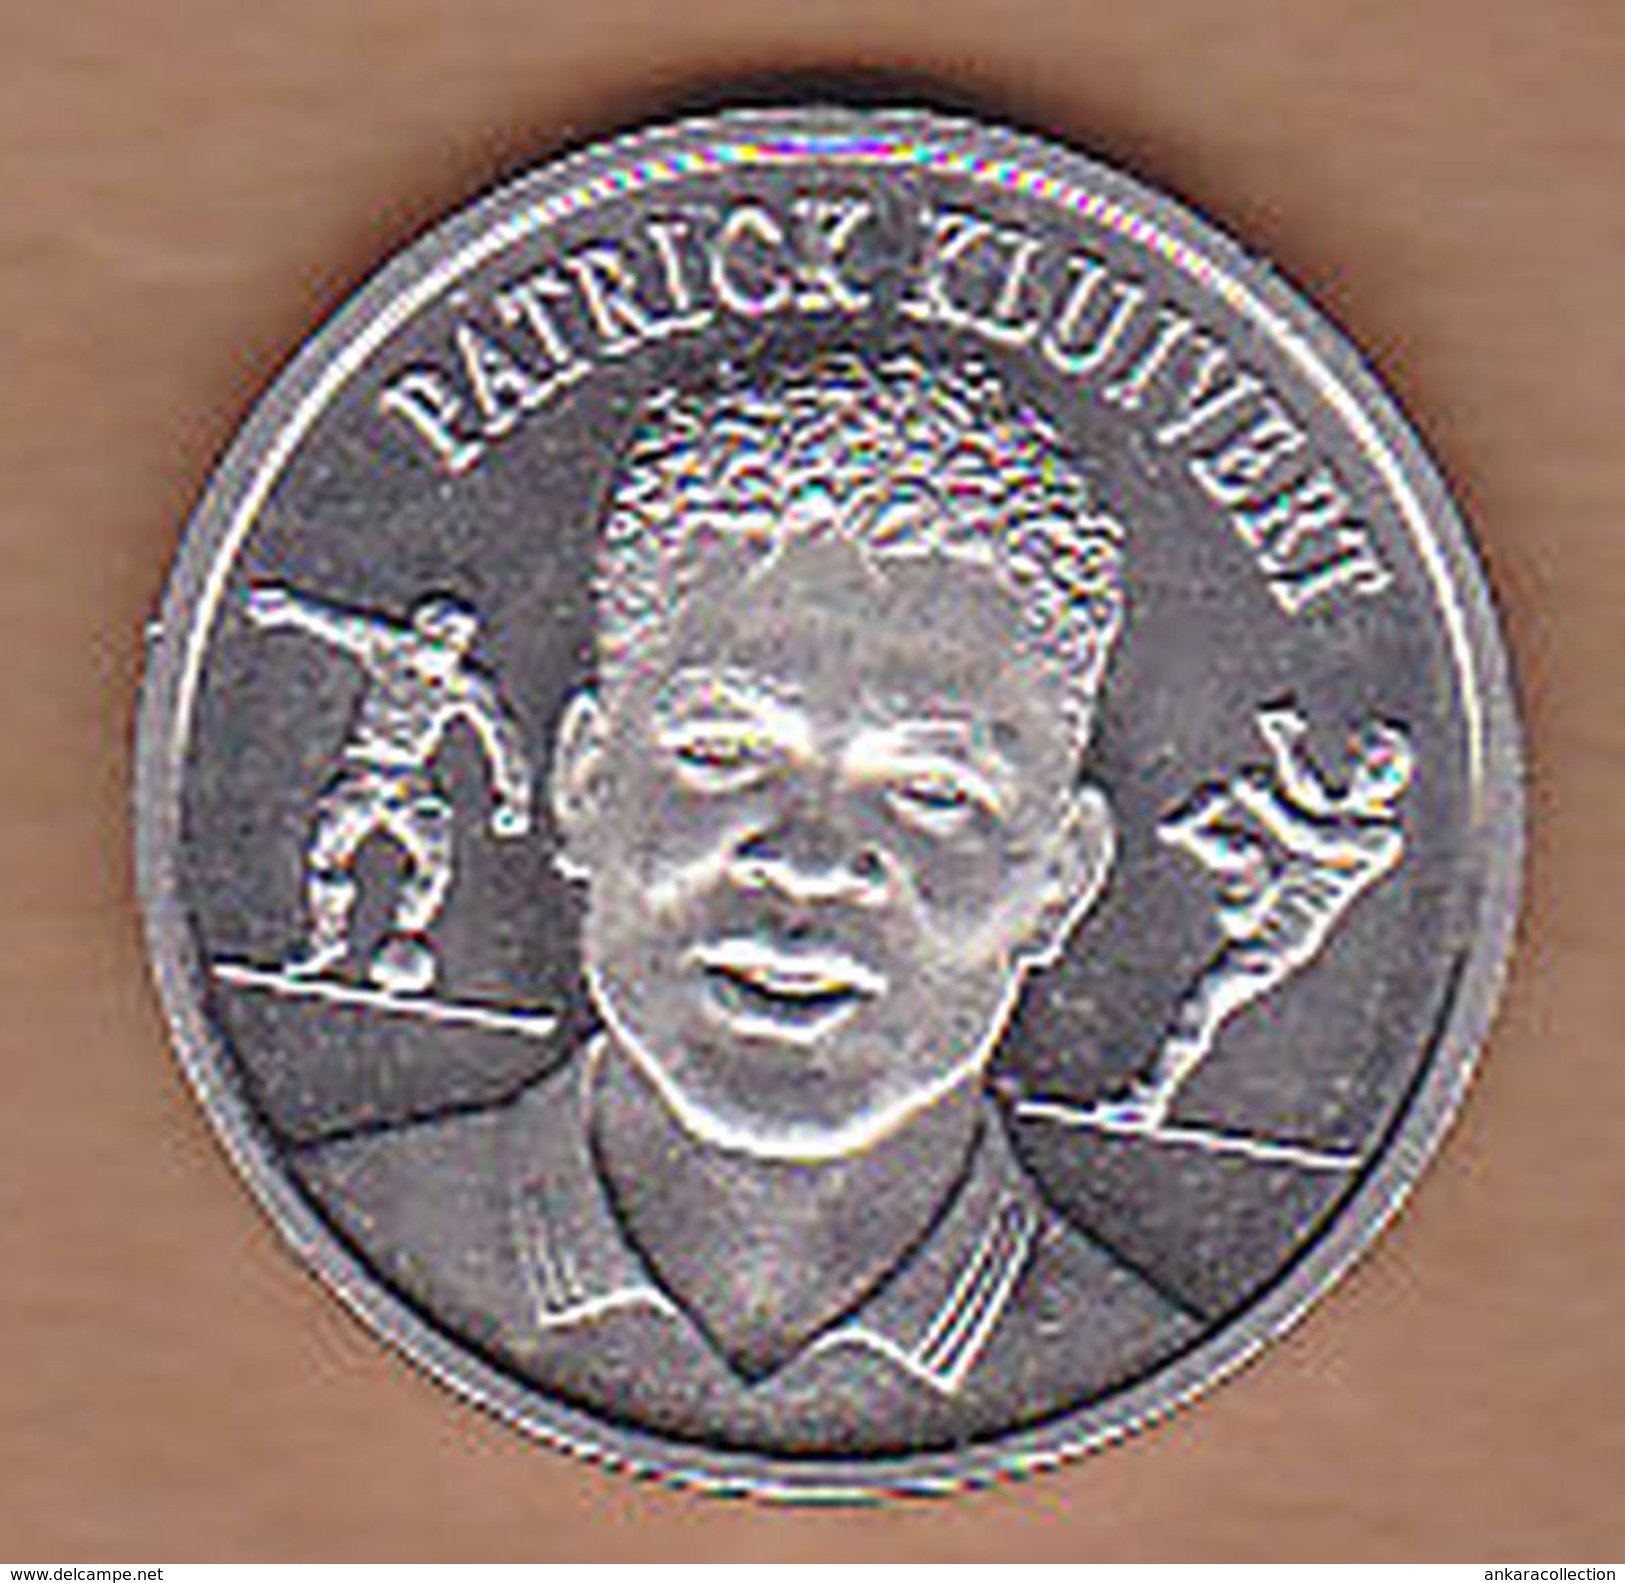 AC -  PATRICK KLUIVERT KNVB 1998  FOOTBALL SOCCER PLAYER TOKEN JETON - Monedas / De Necesidad